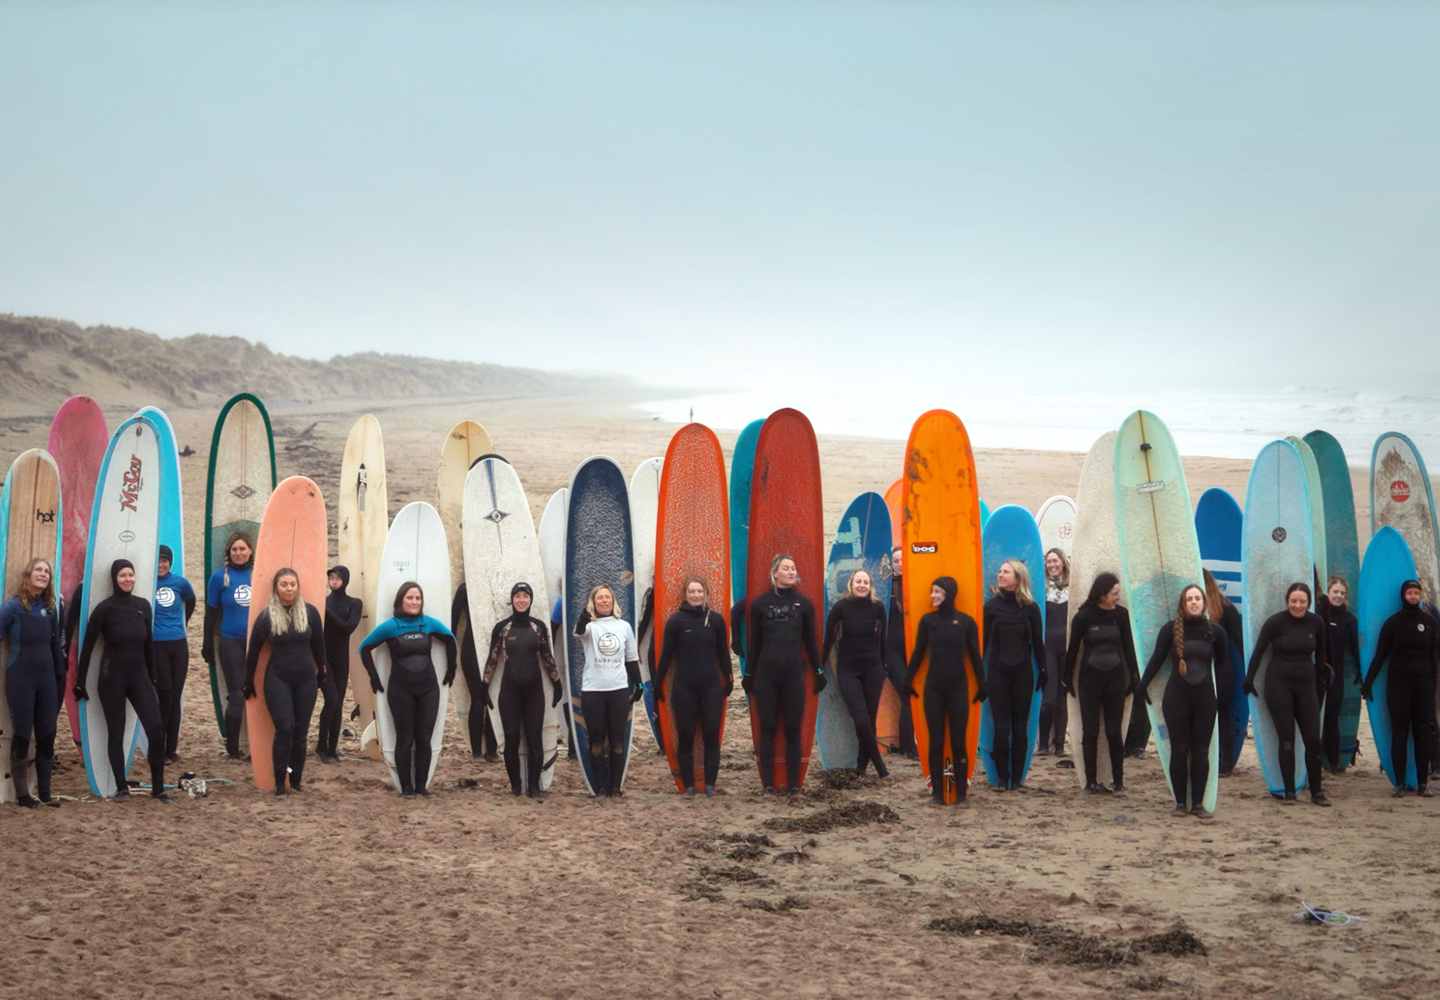 Surfing England namestraps